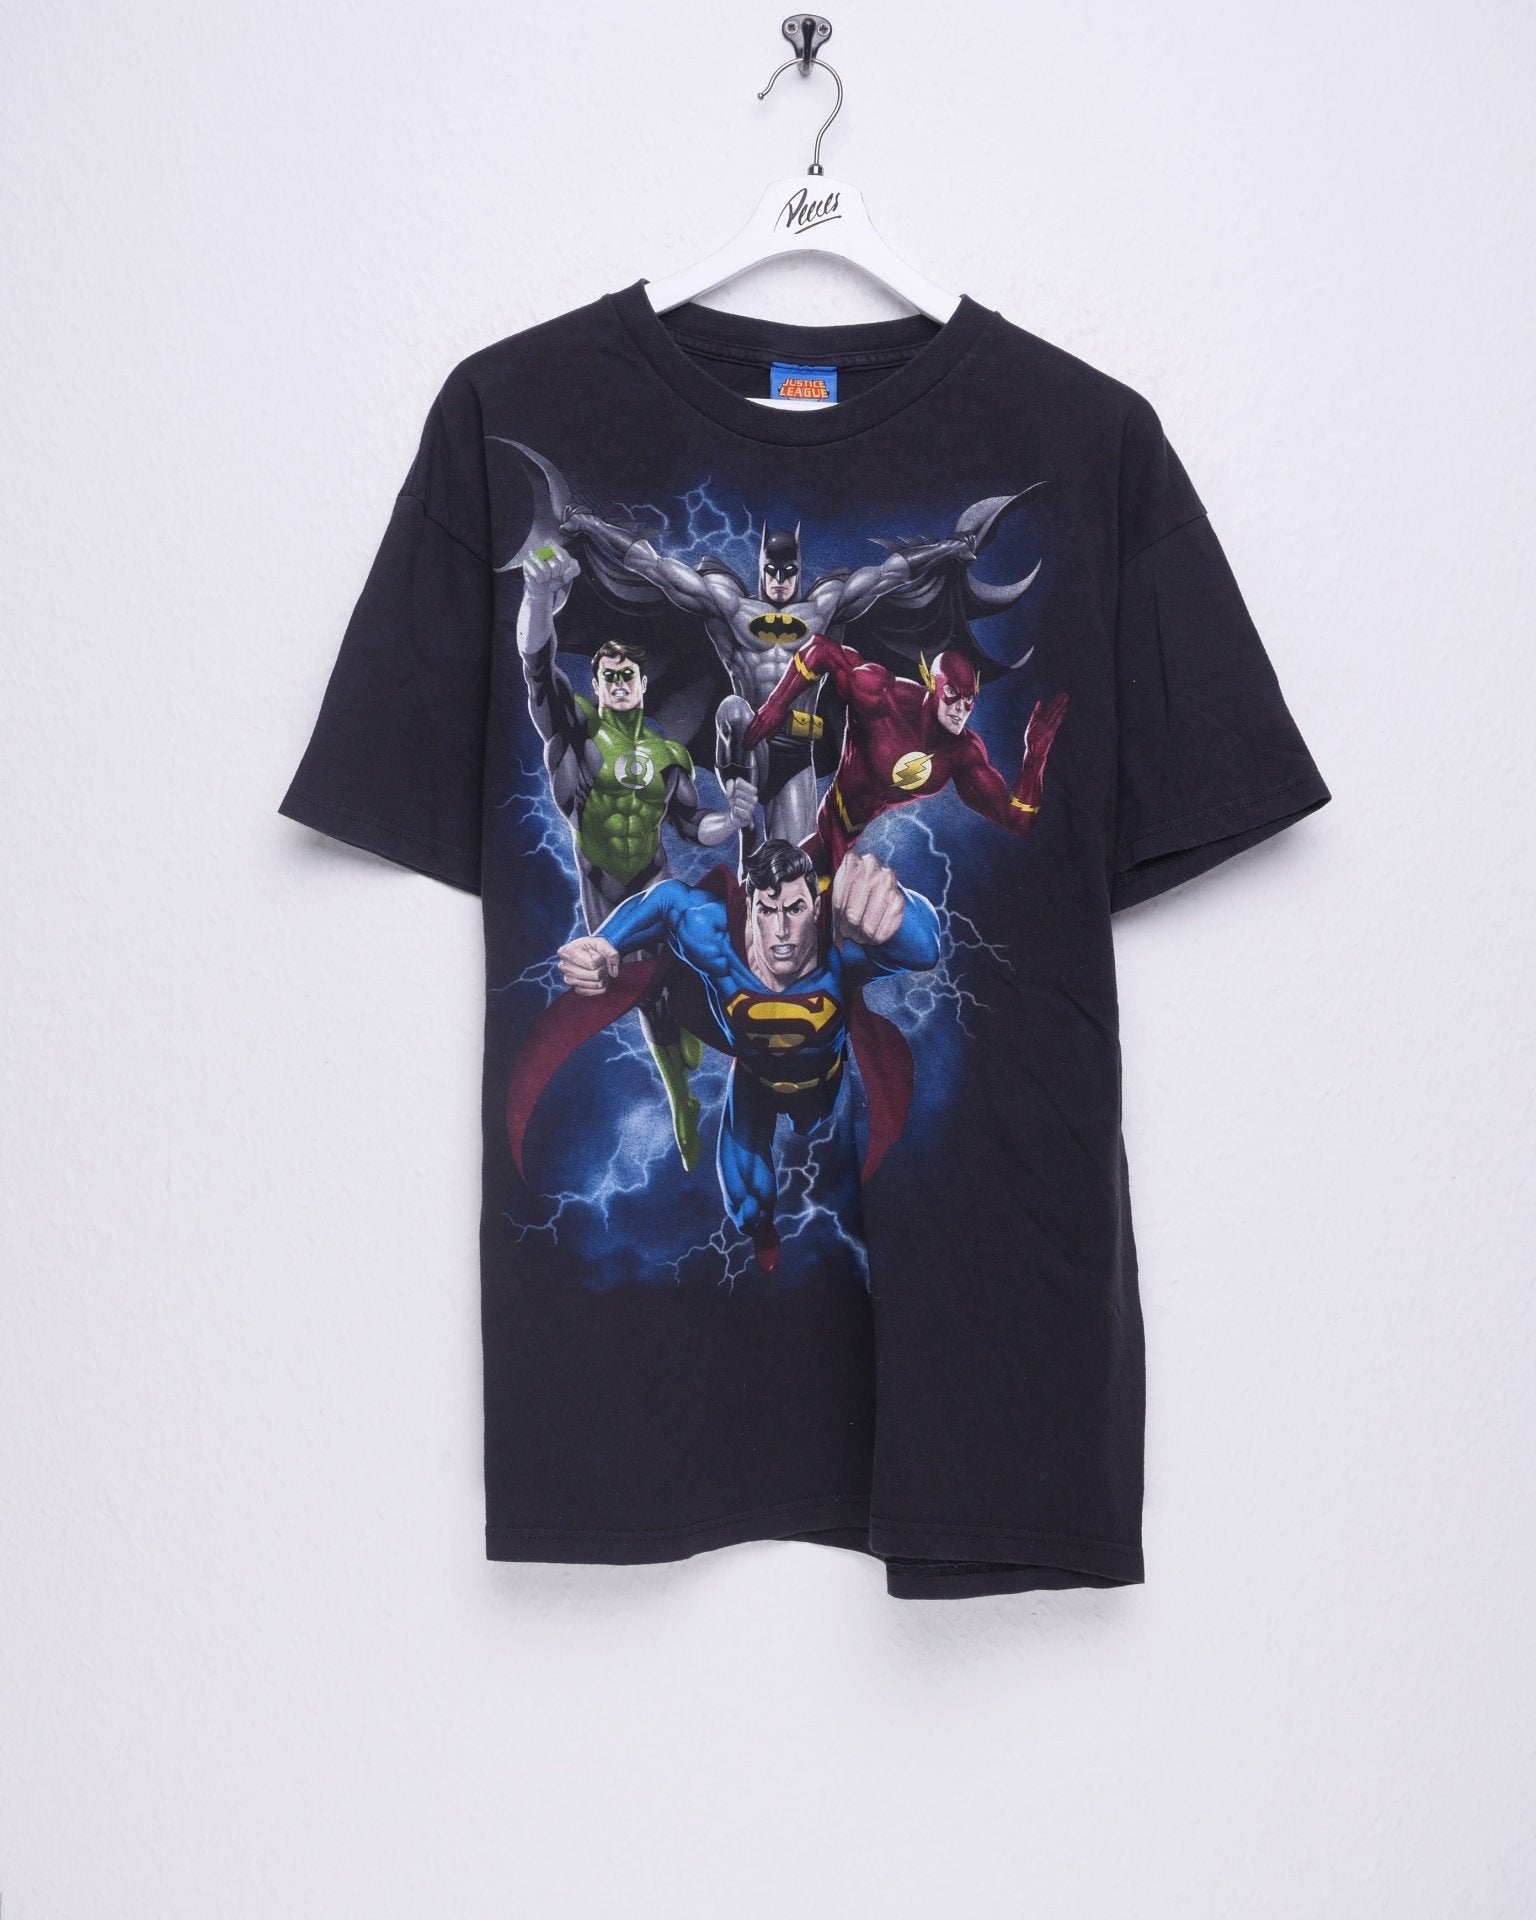 'Justice League' printed Graphic Vintage Shirt - Peeces